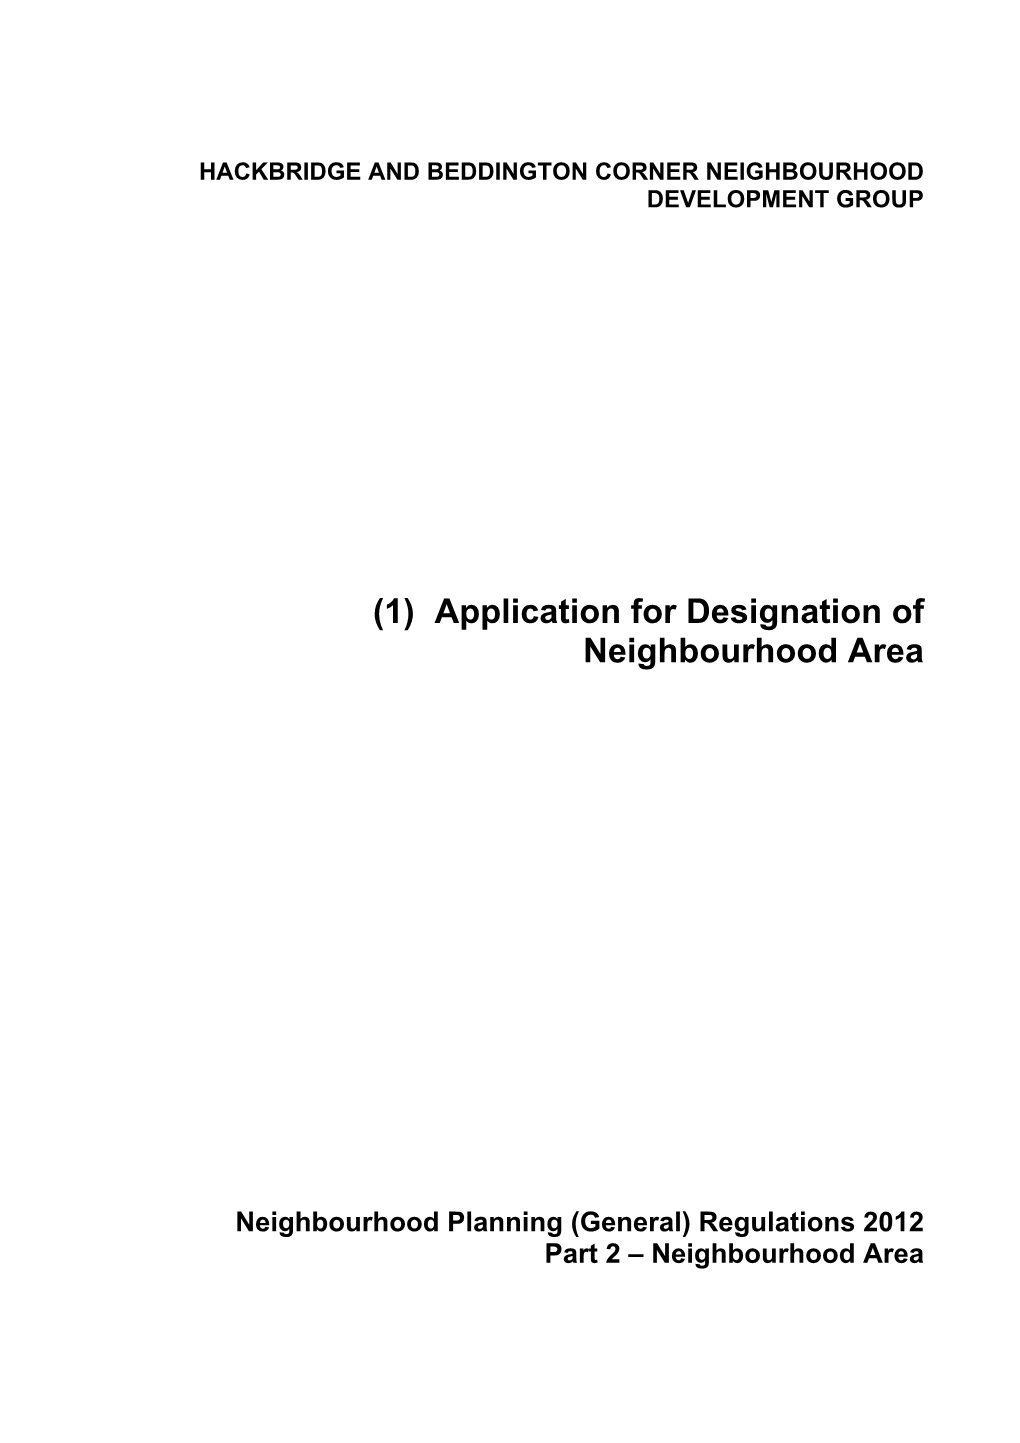 Application for Designation of Neighbourhood Area